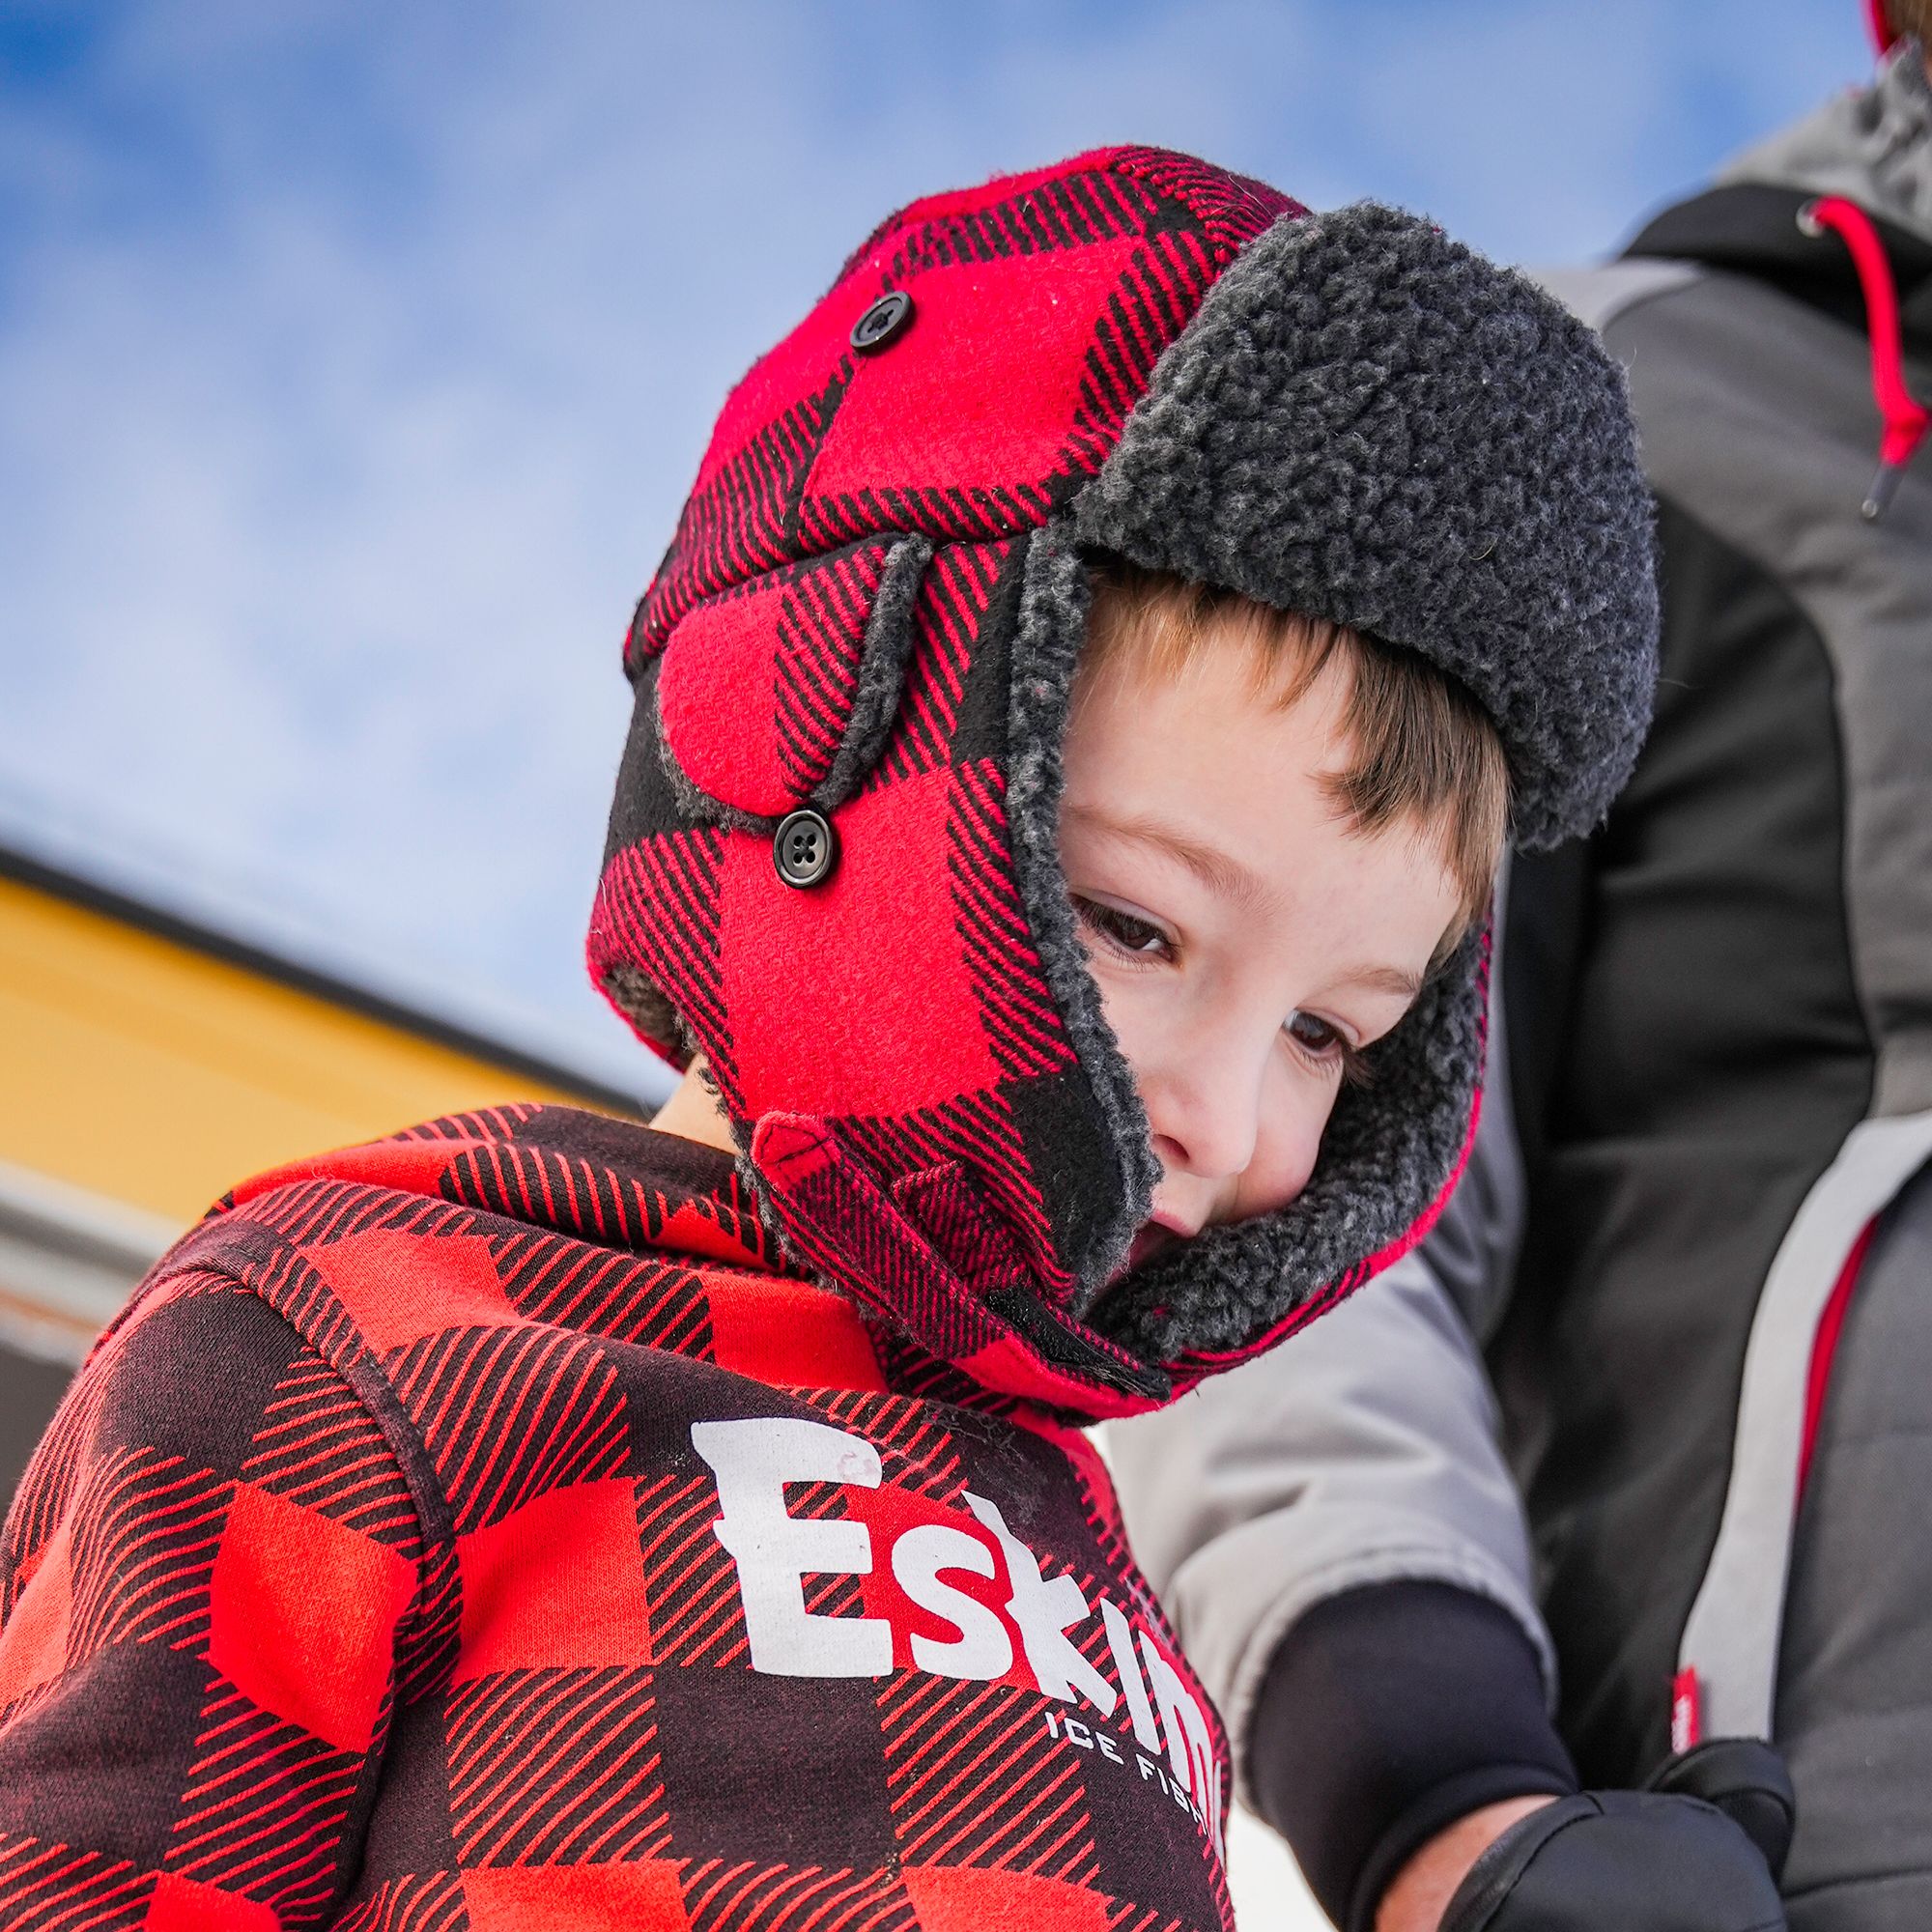 Eskimo Youth Plaid Alaskan Fur Hat